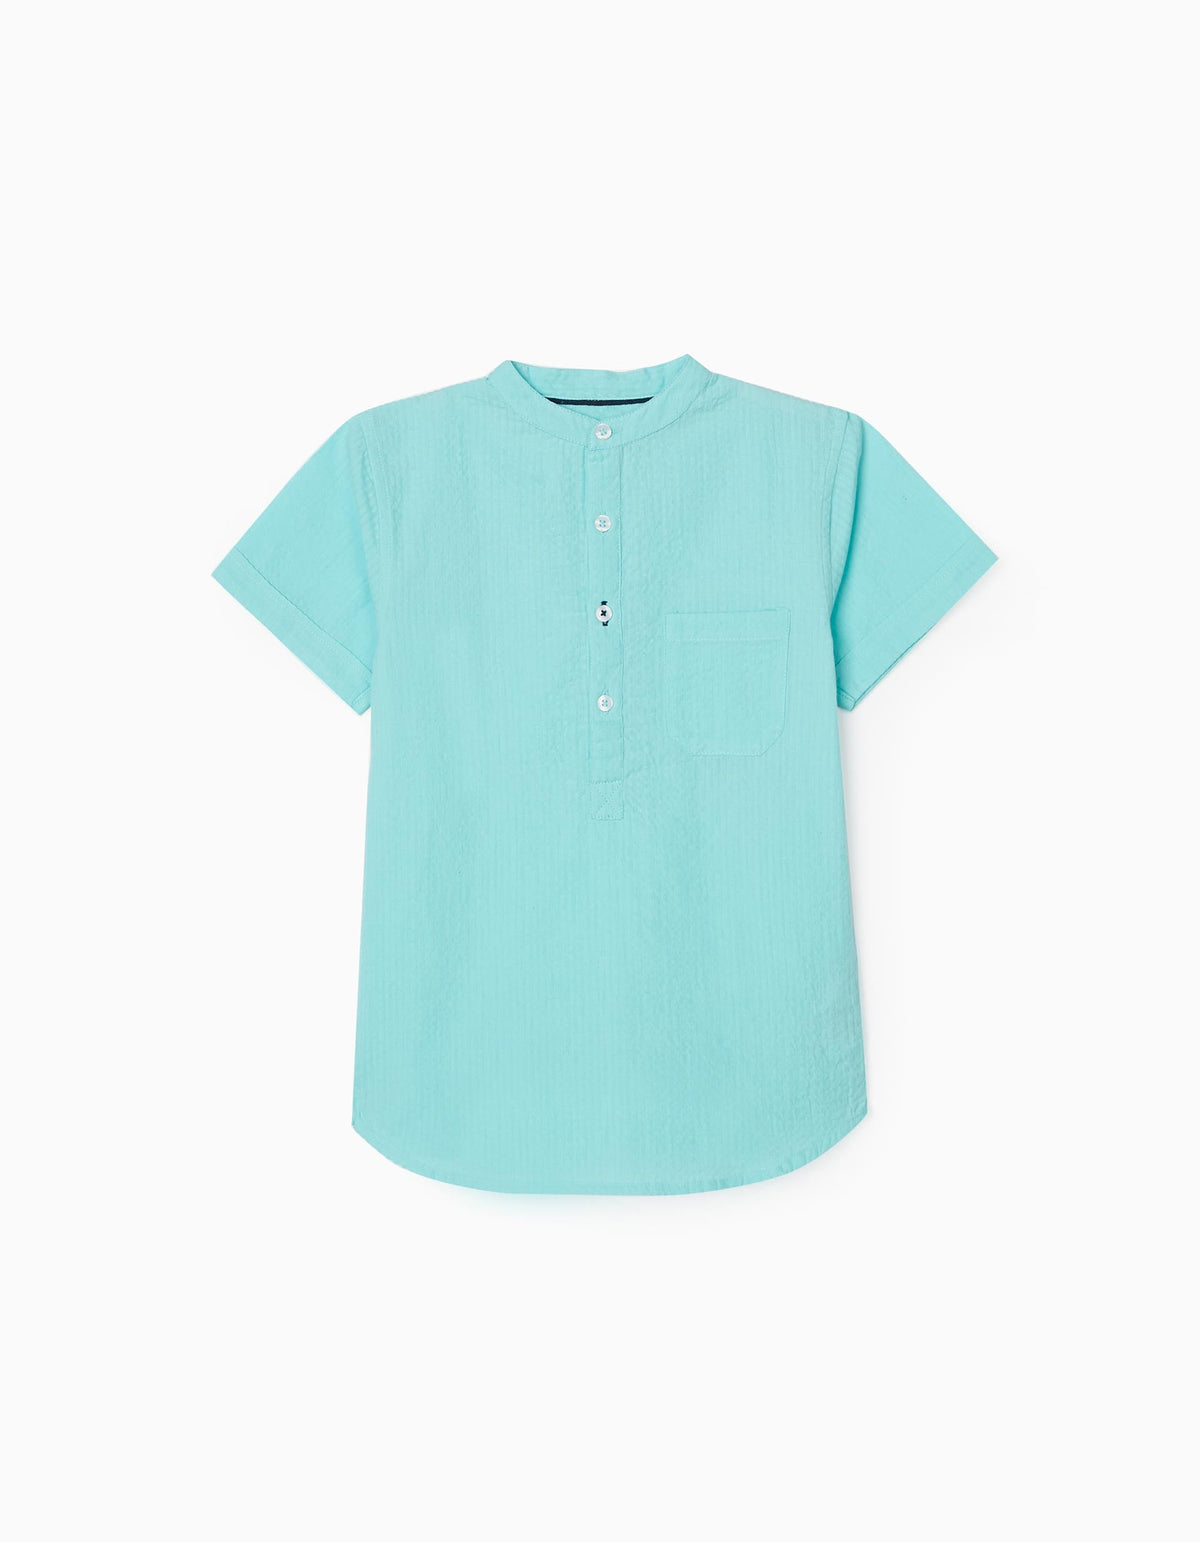 Zippy Boys Aqua Green Textured Short-Sleeved Shirt